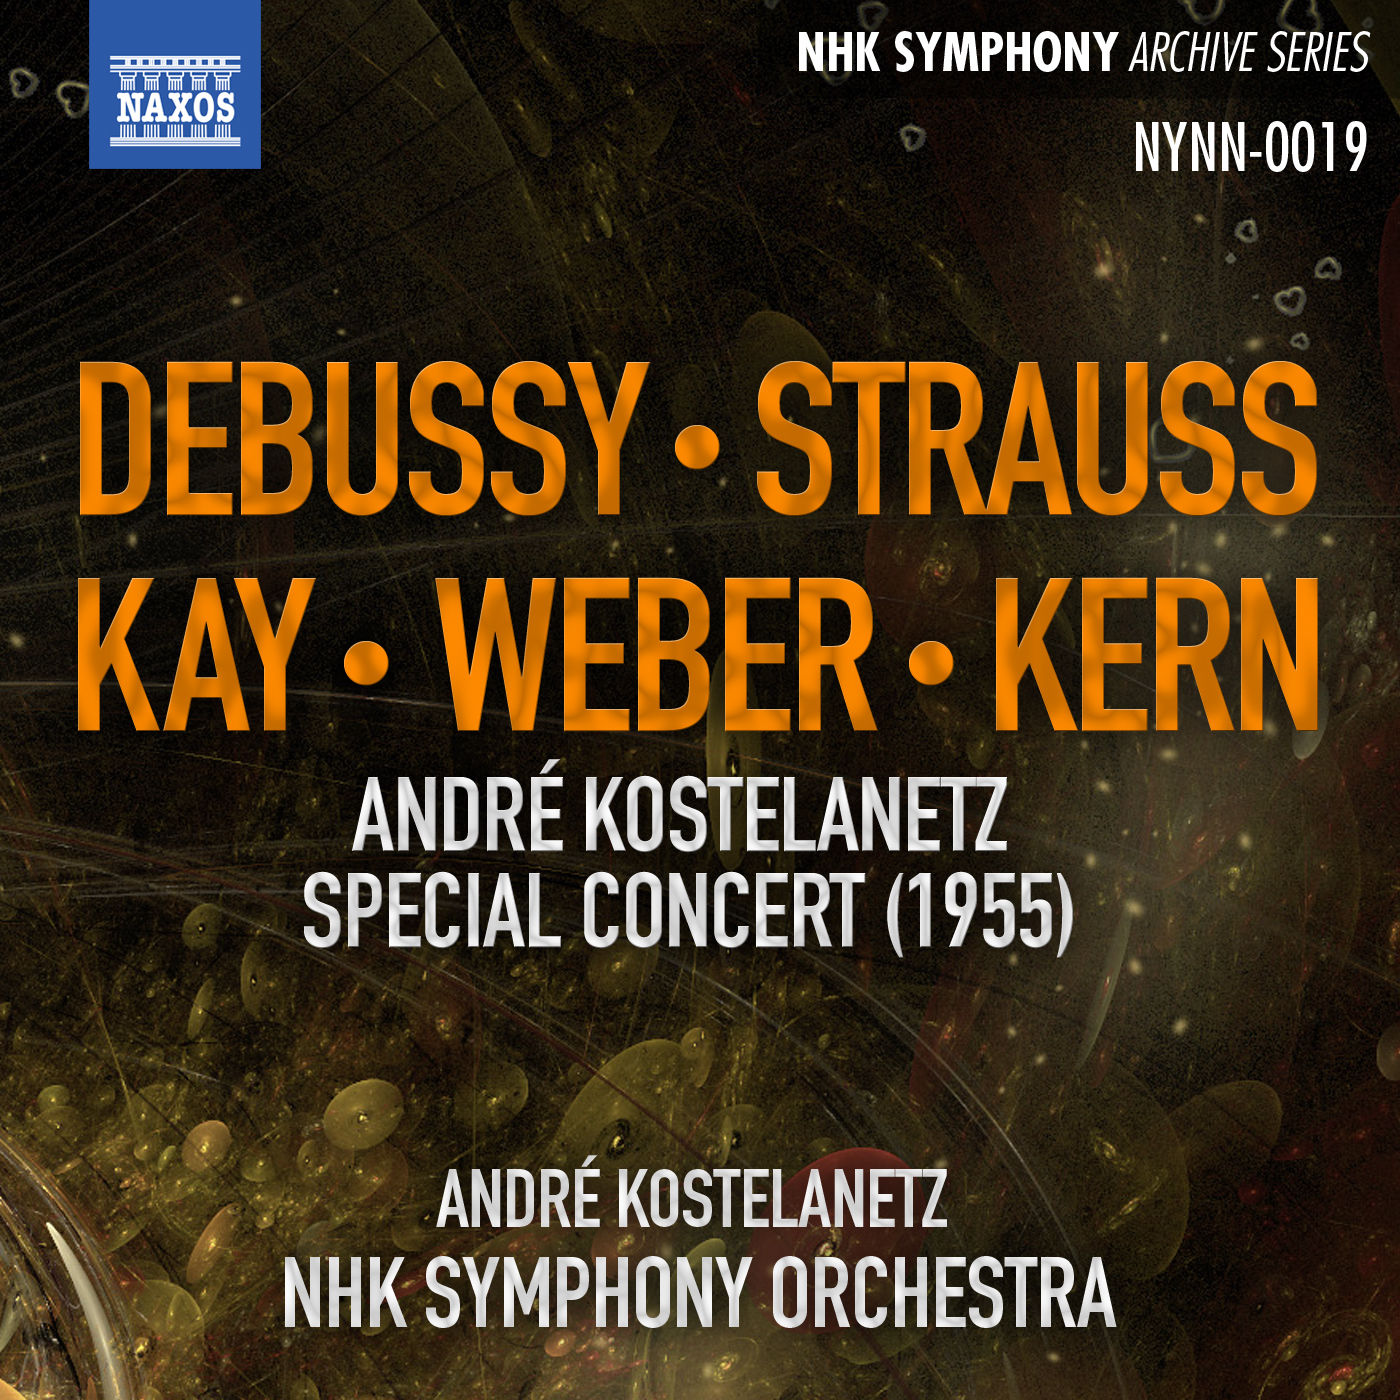 NHK Symphony Orchestra – André Kostelanetz Special Concert